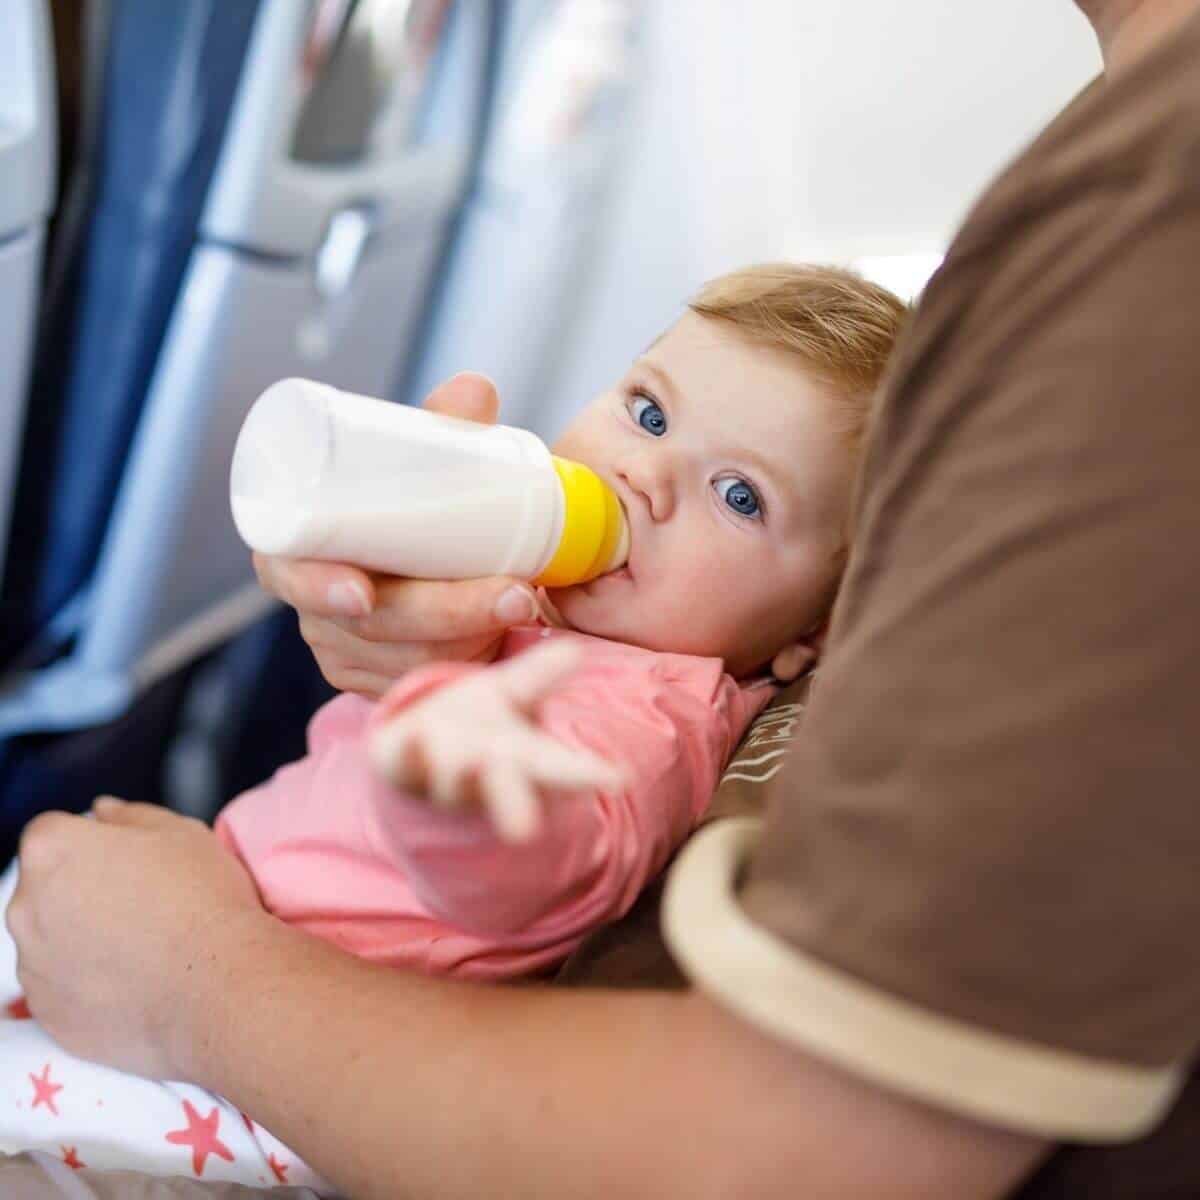 Baby bottle feeding on a plane